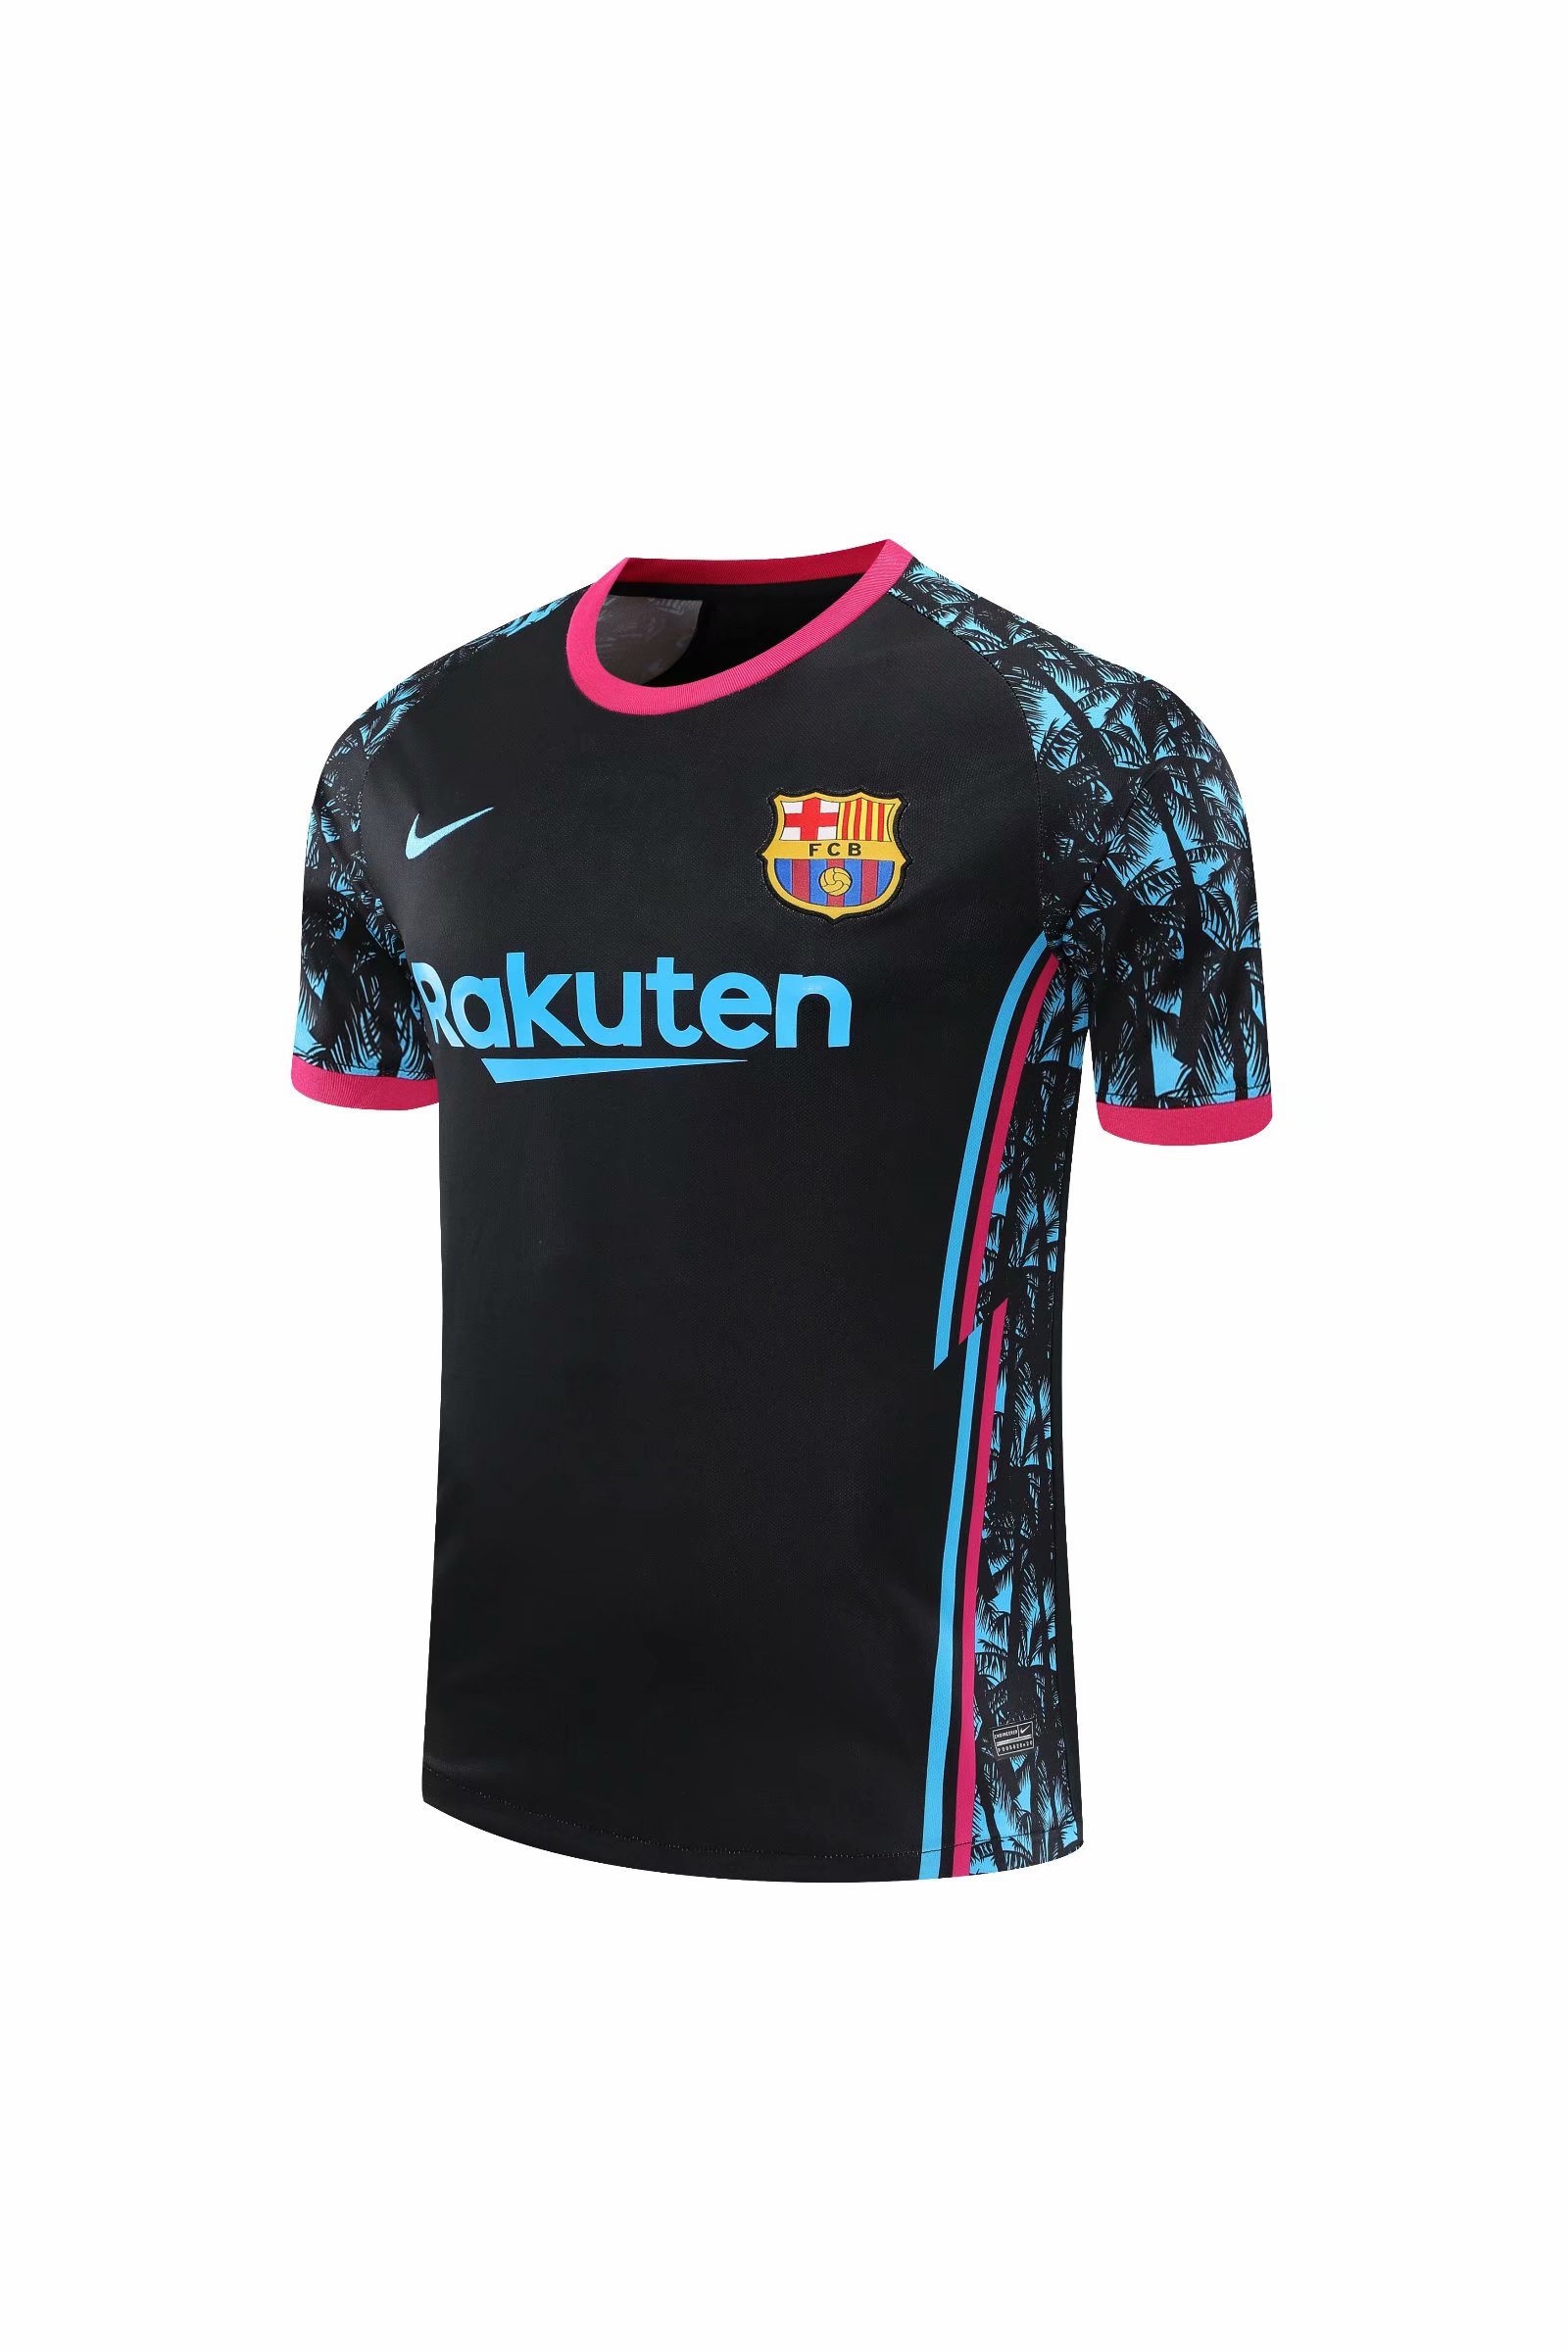 Barcelona Home 2020-2021 soccer jersey